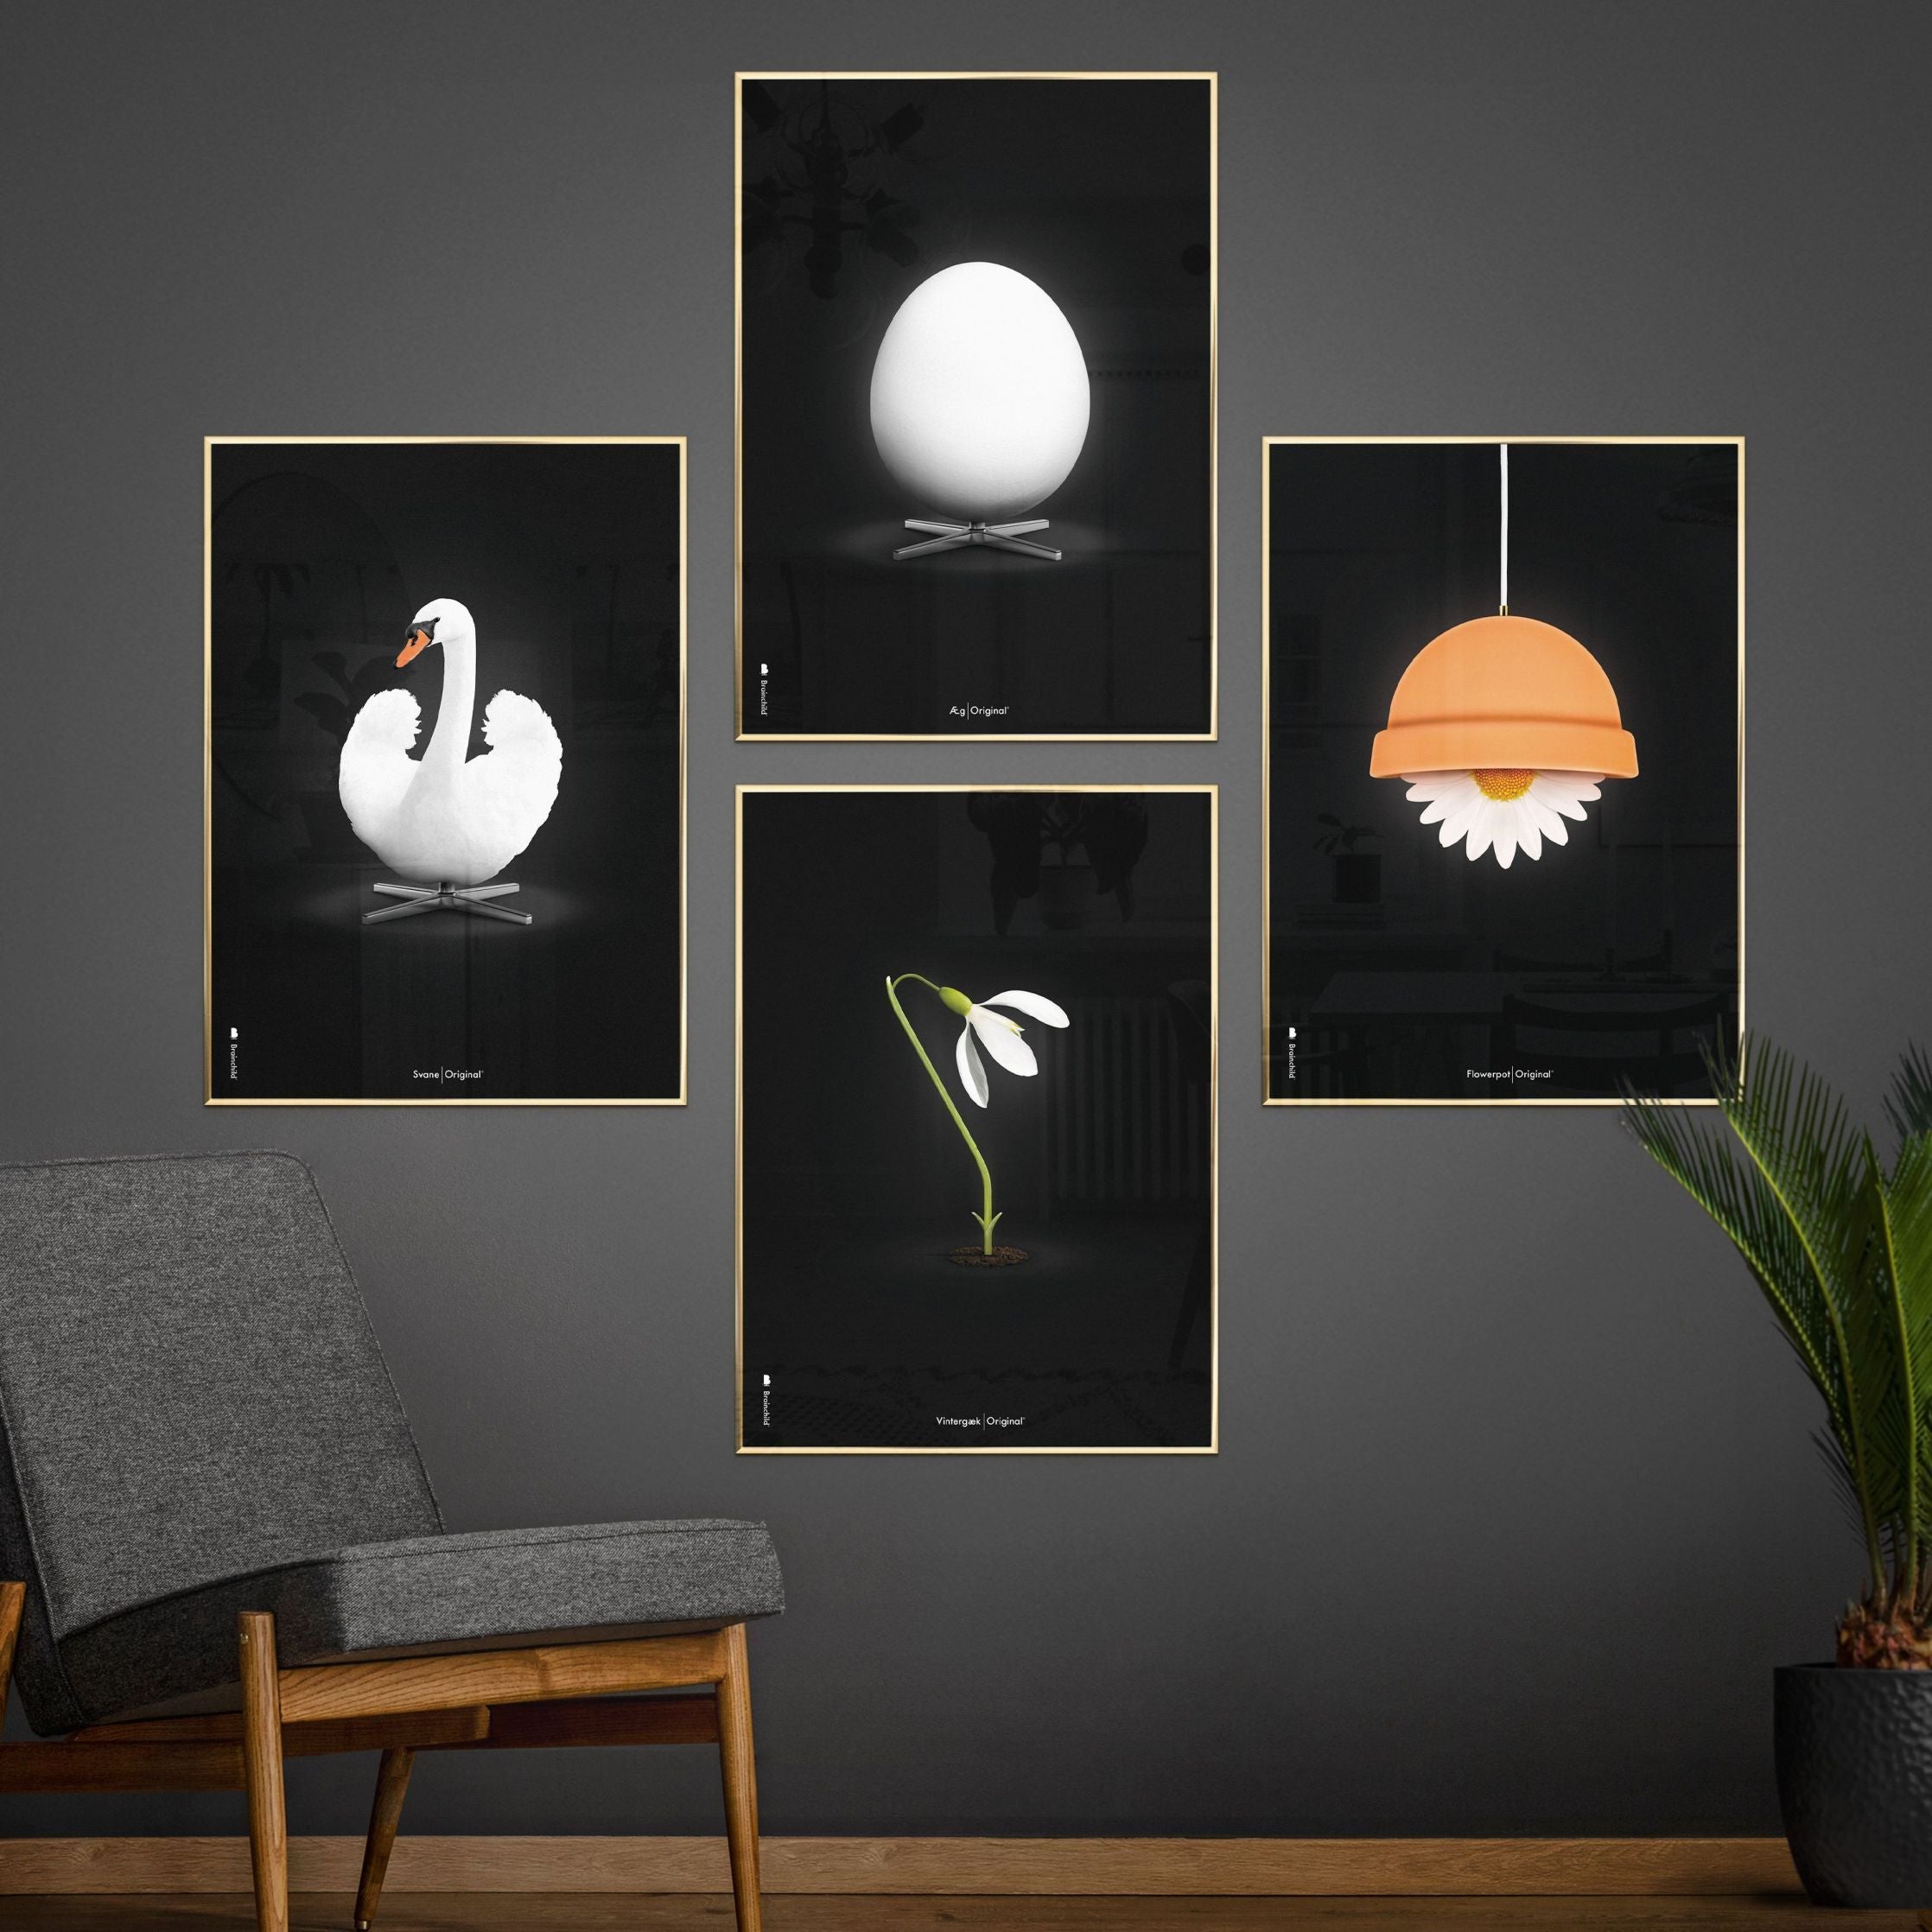 Brainchild Flowerpot Classic Poster, Brass Frame 30x40 Cm, Black Background